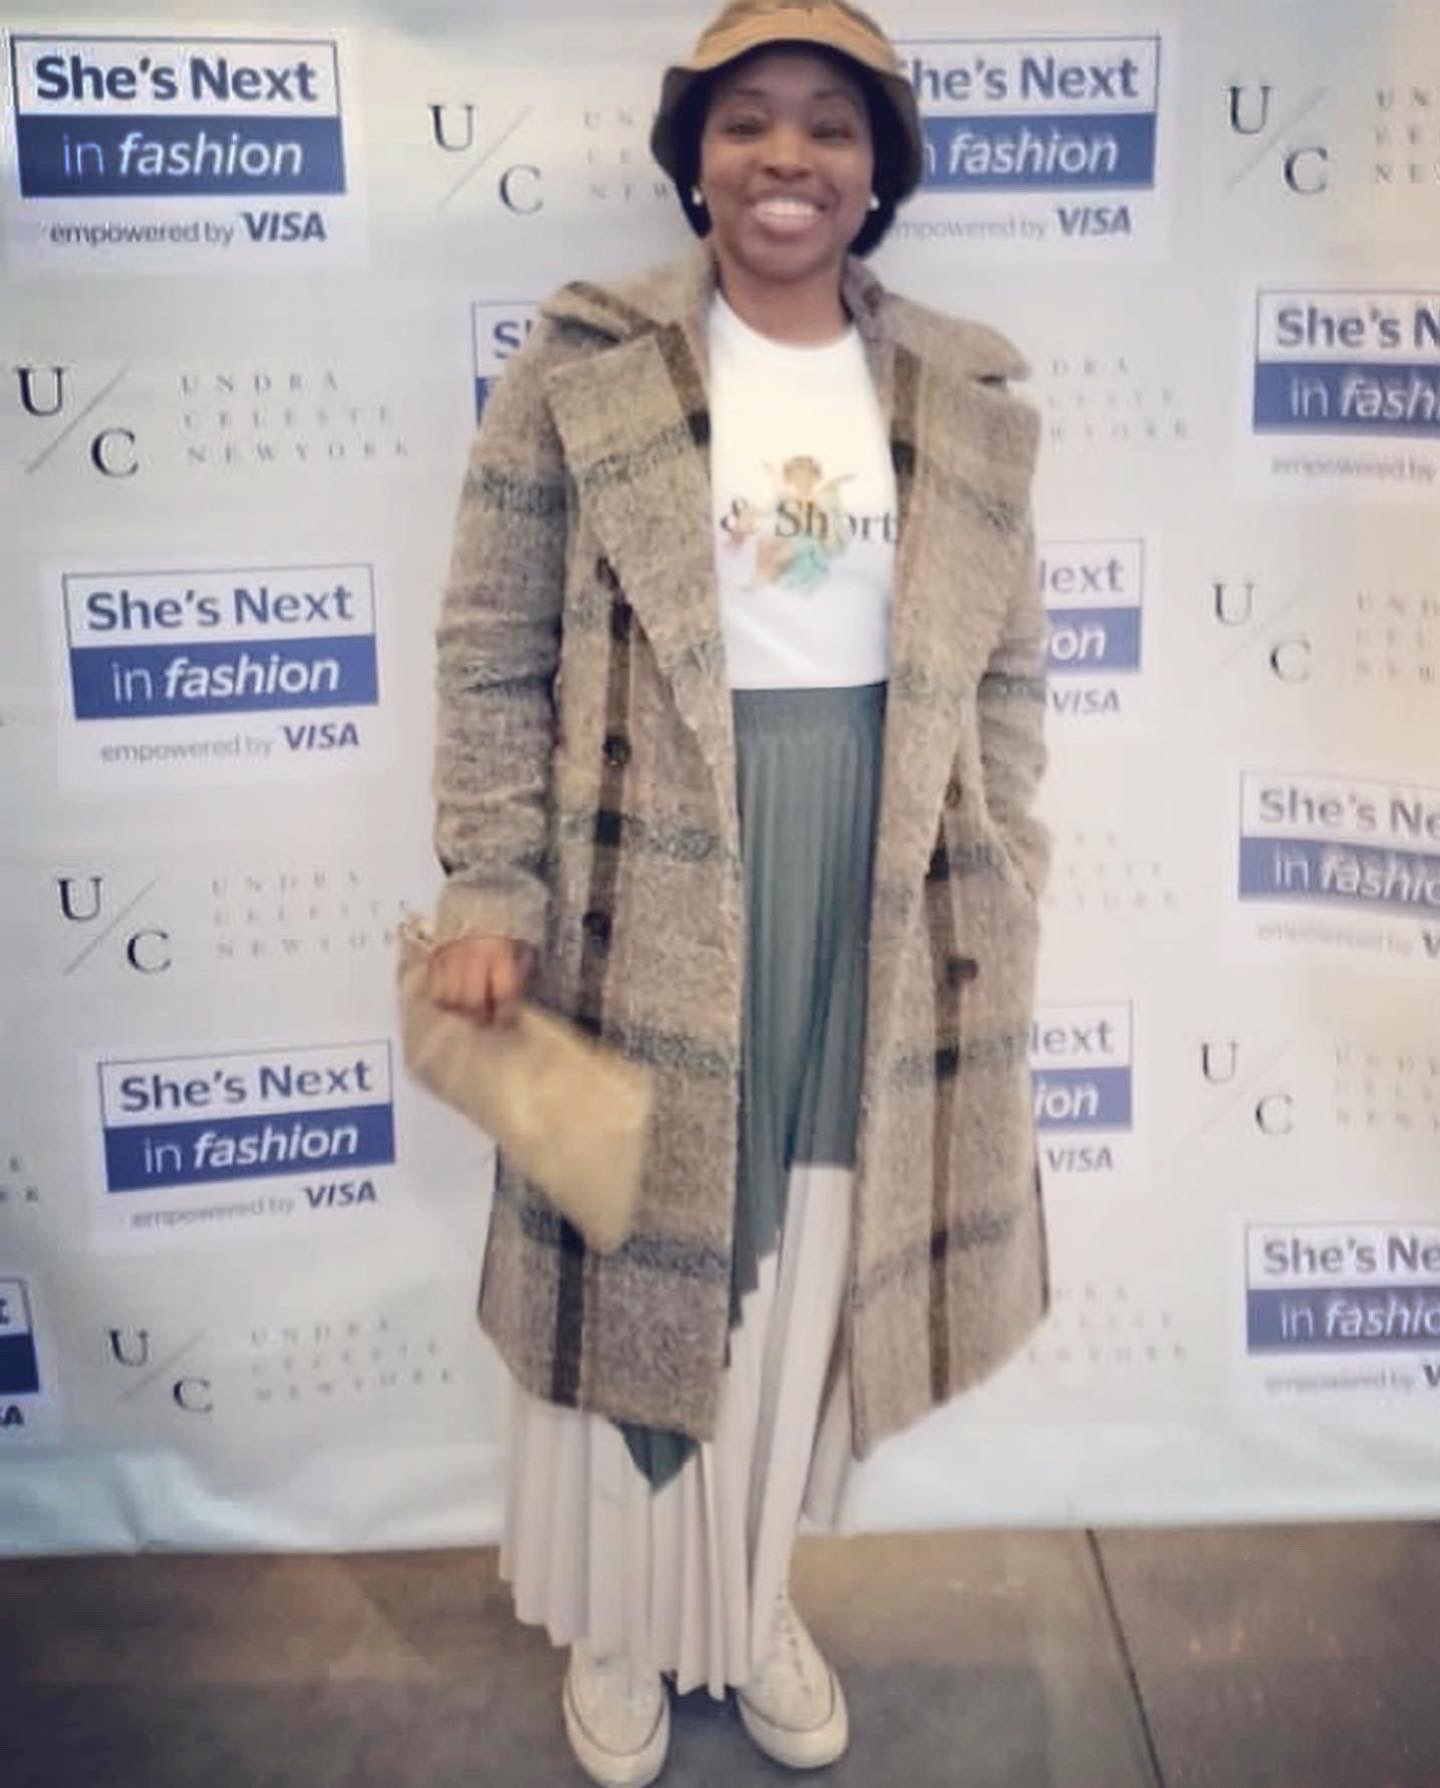 #BrooklynGirlCode #EventRecap: Grand Opening of Undra Celeste New York!